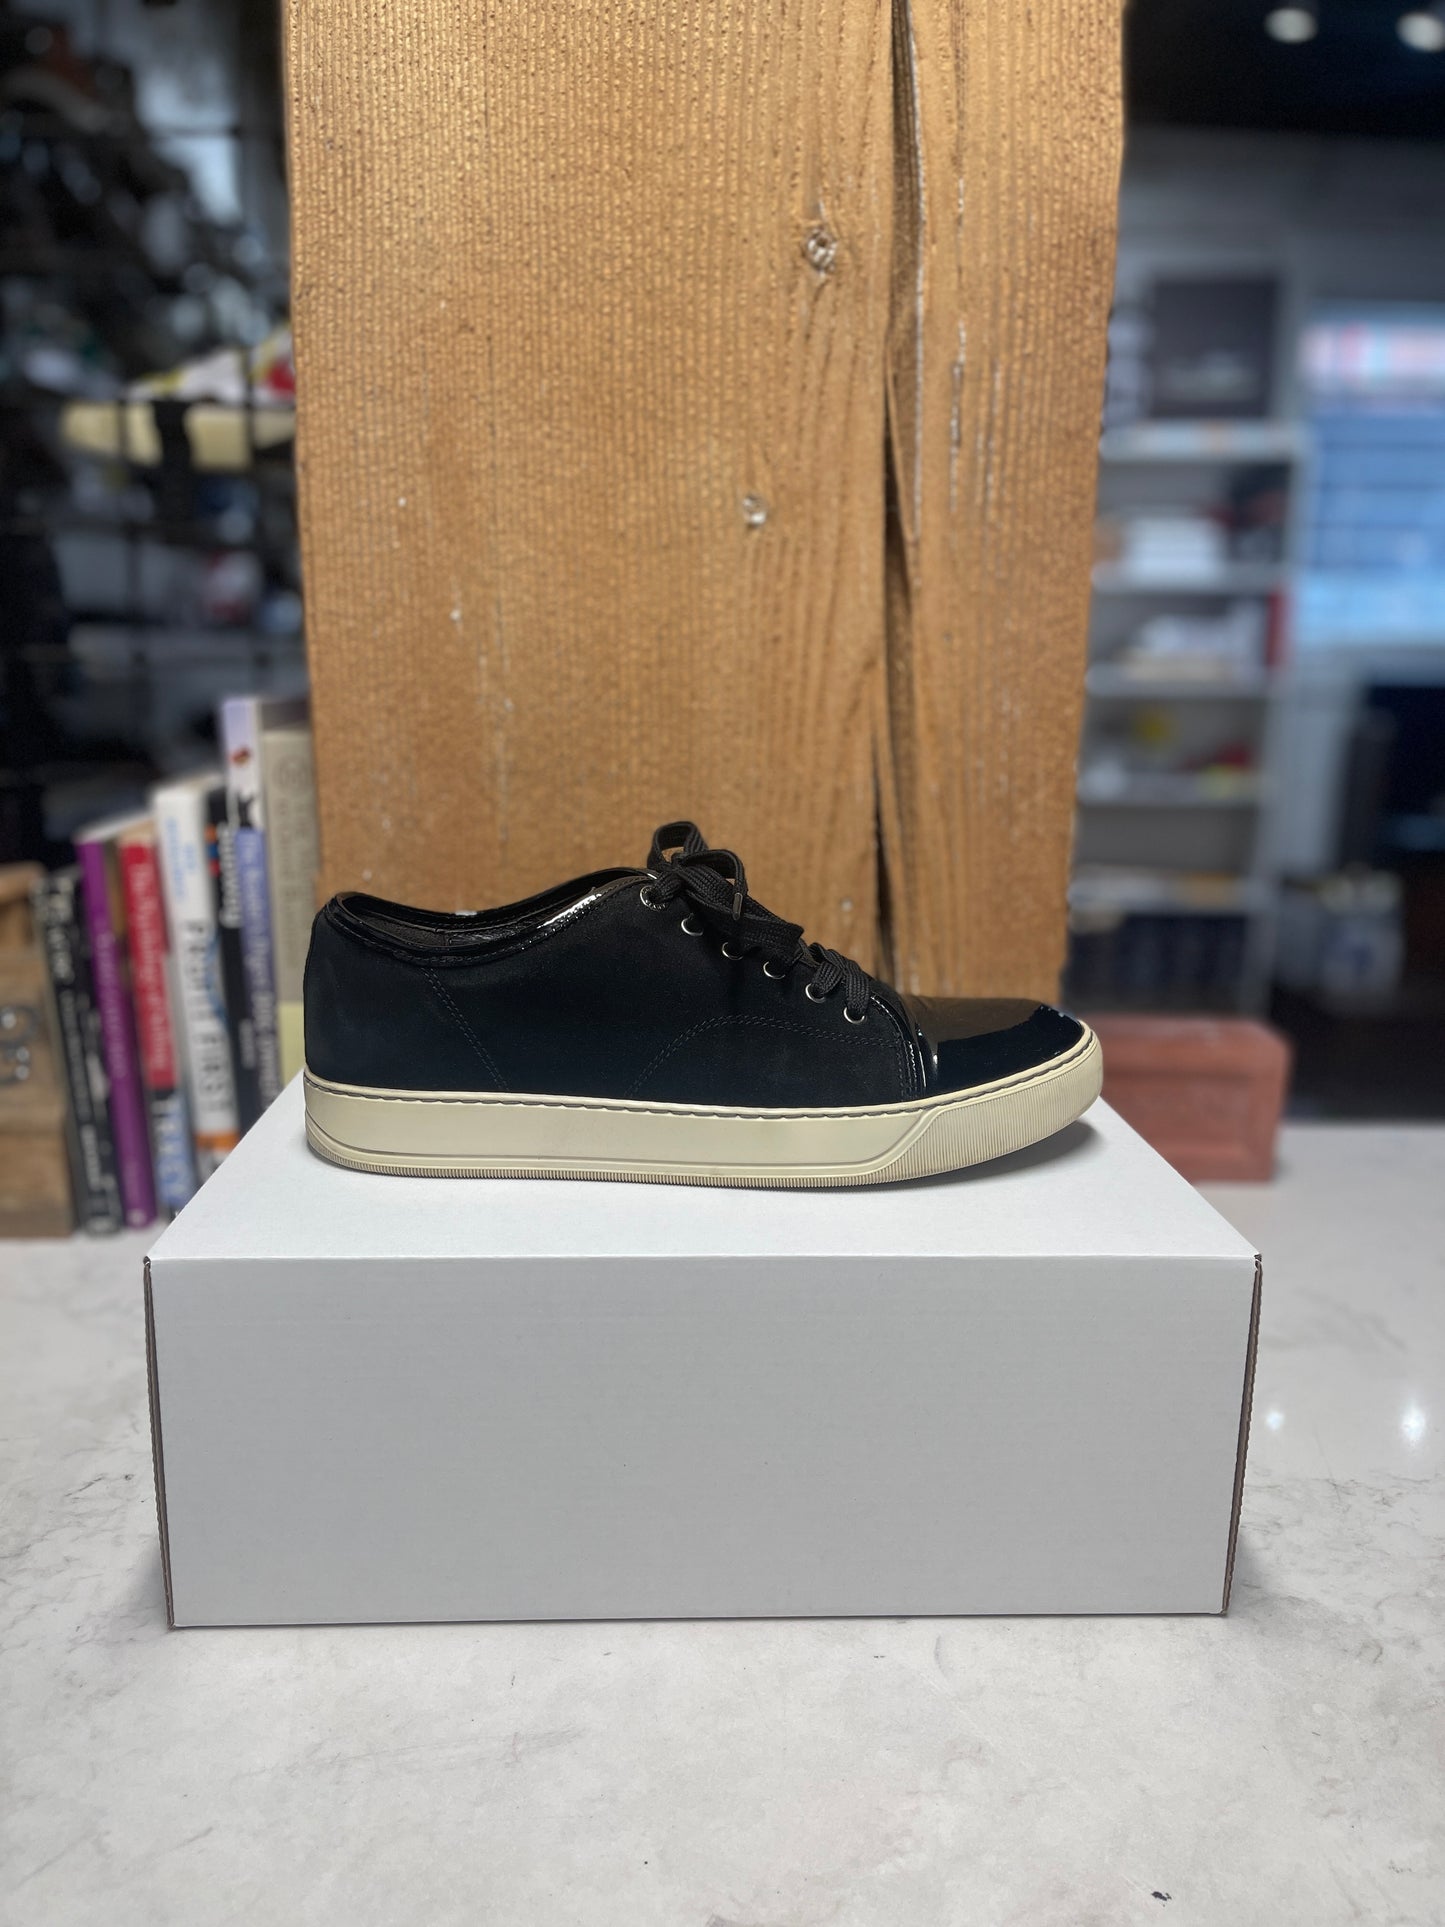 Black Suede Lanvin Sneakers (Size 9)